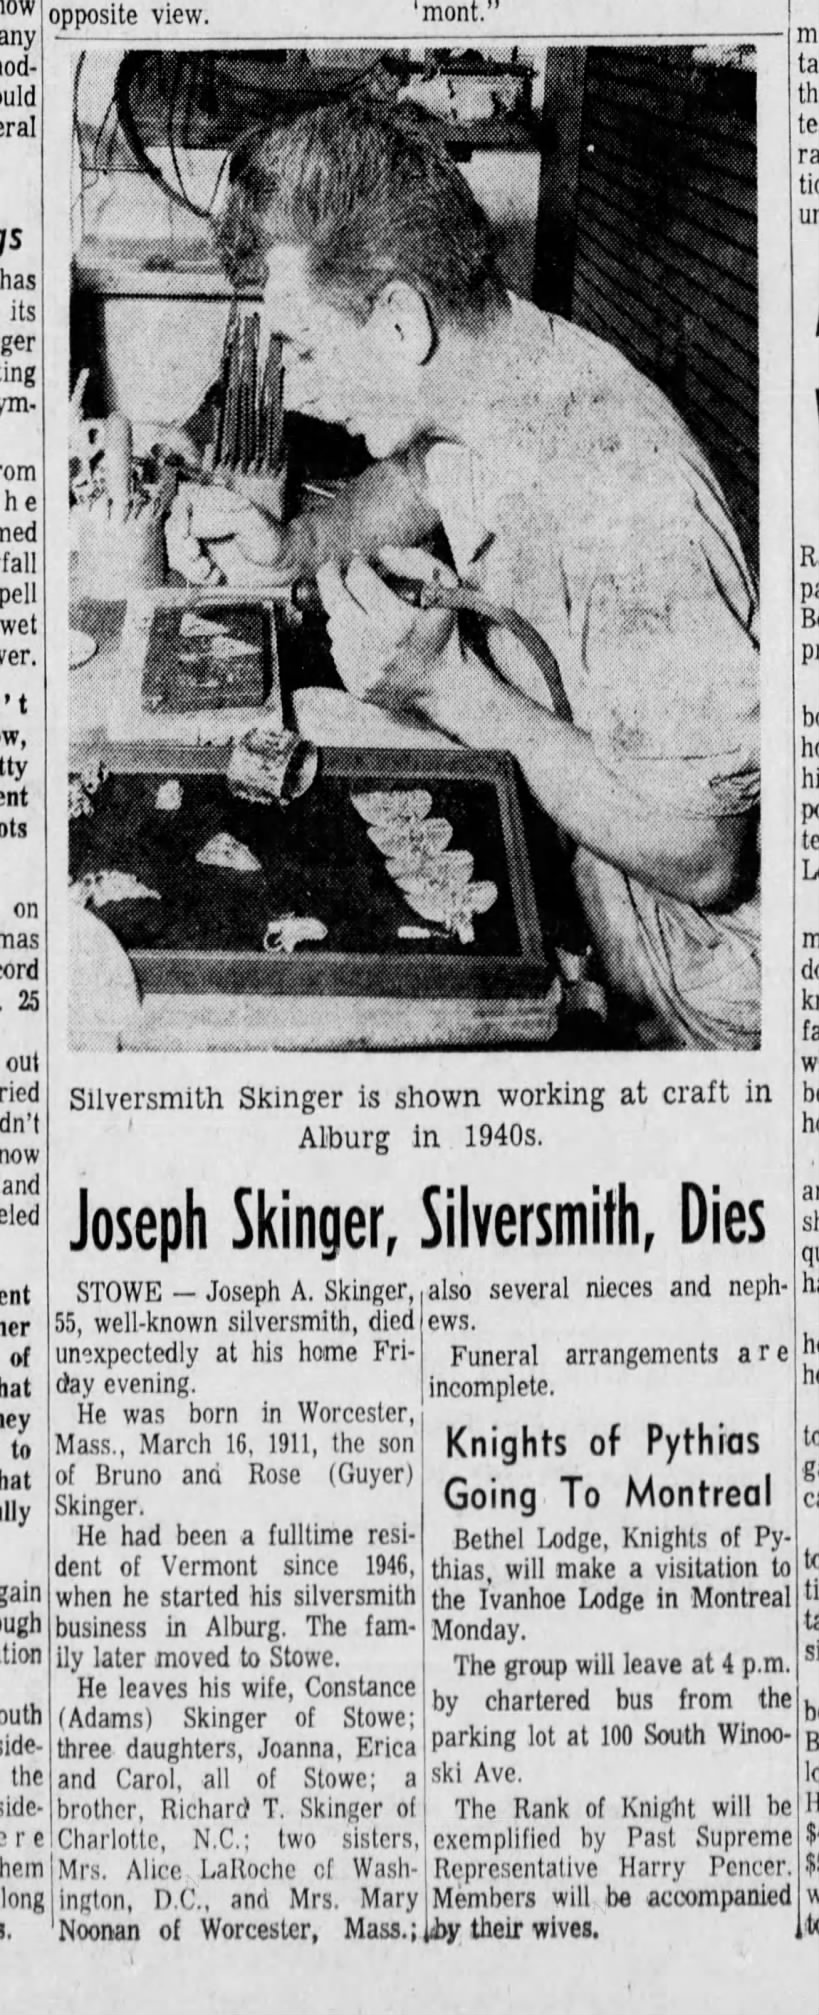 Joe Skinger silversmith dies (1967)